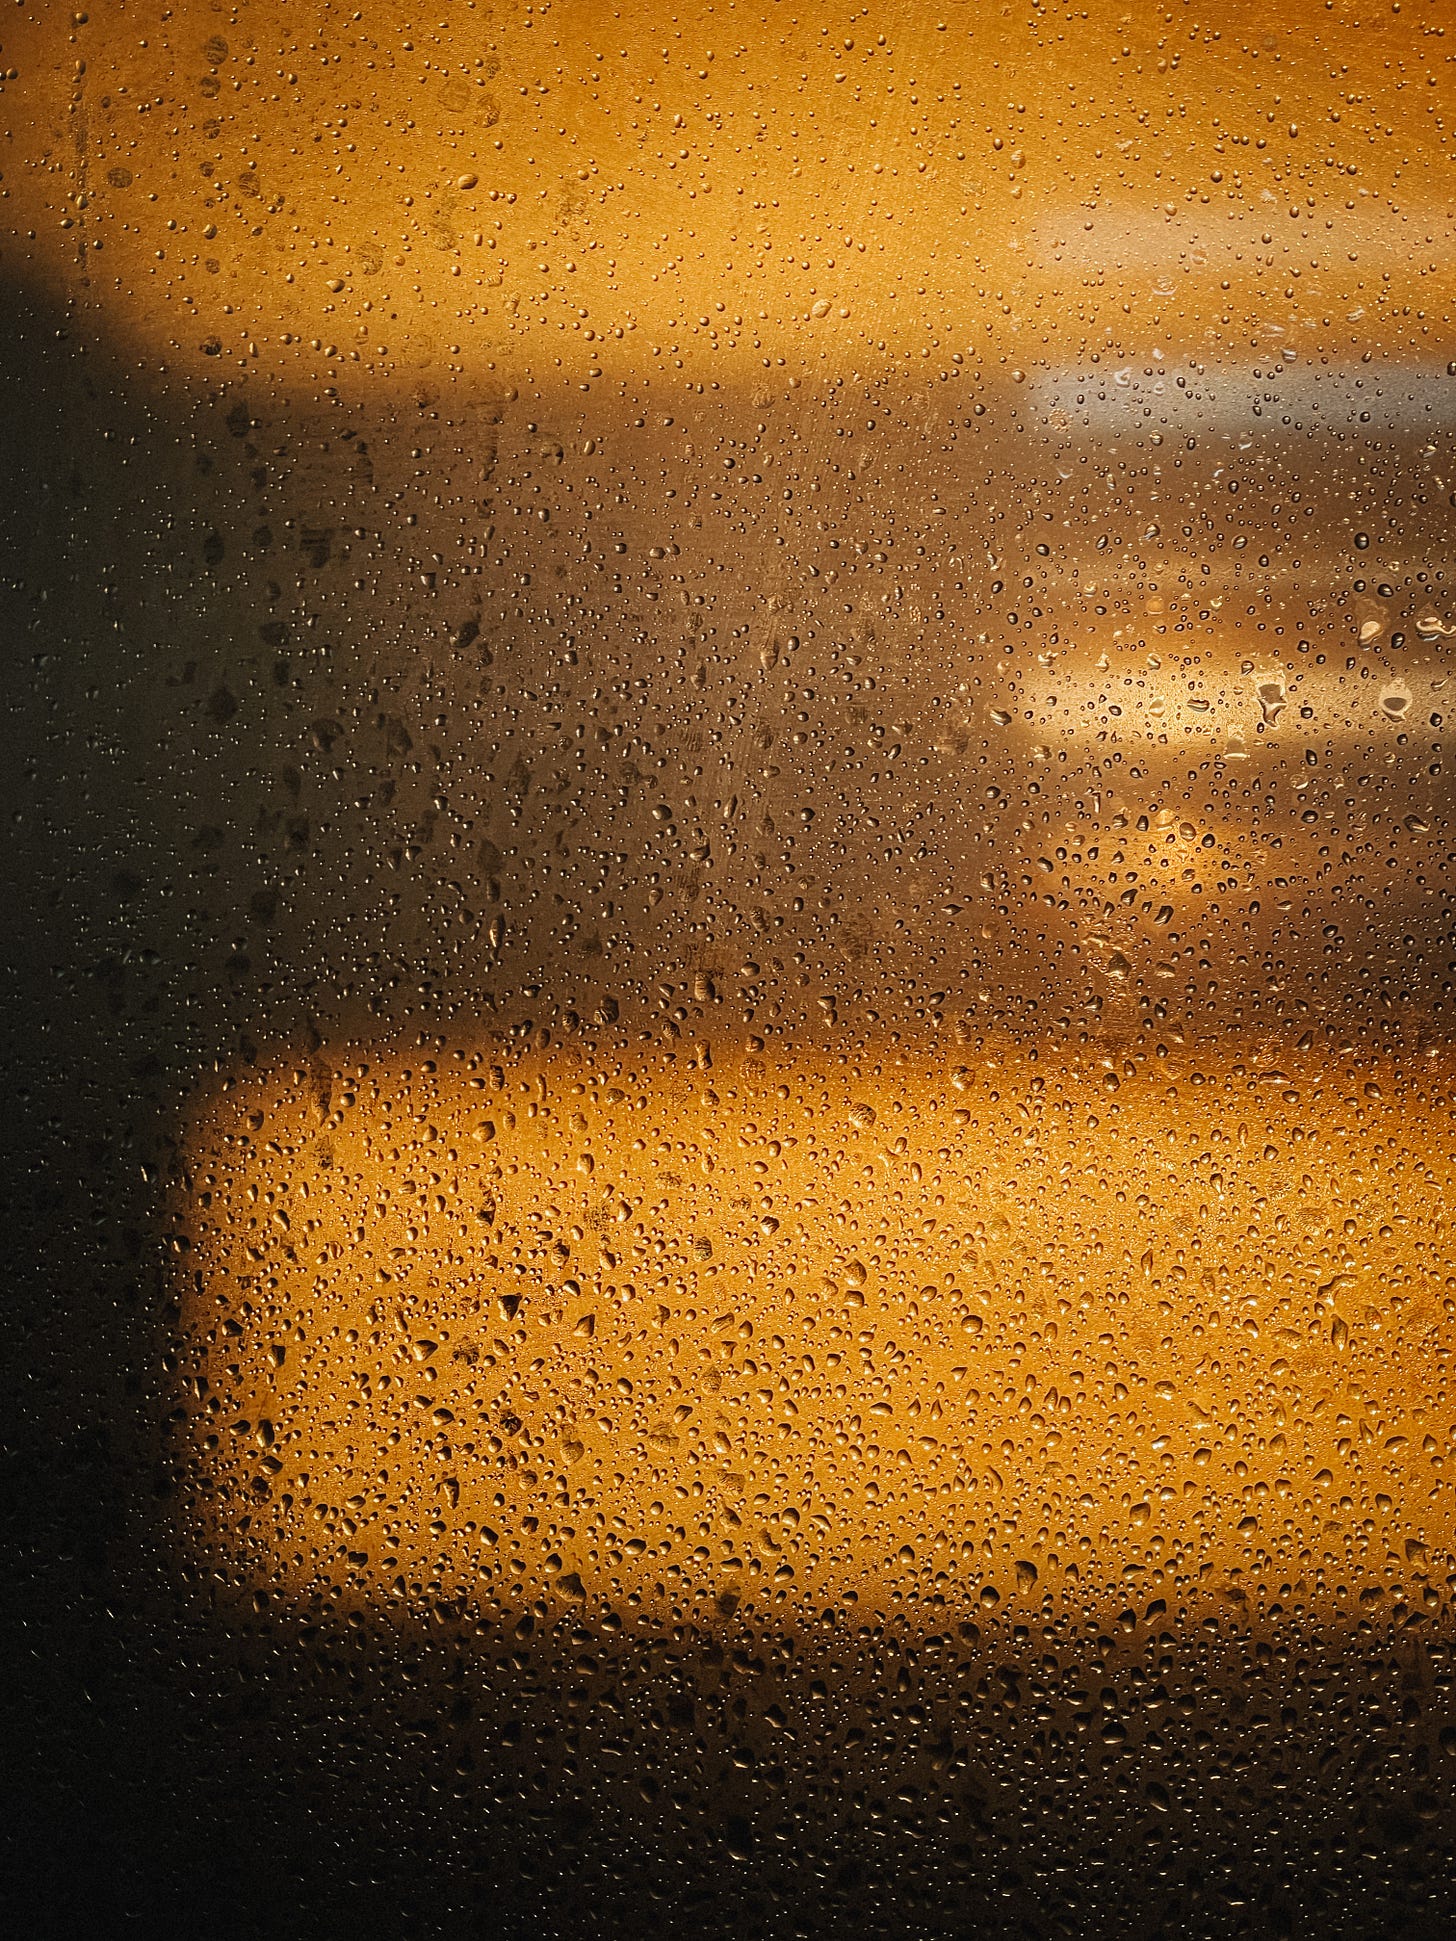 The wet glass of a shower screen, stripes of golden light shining through.